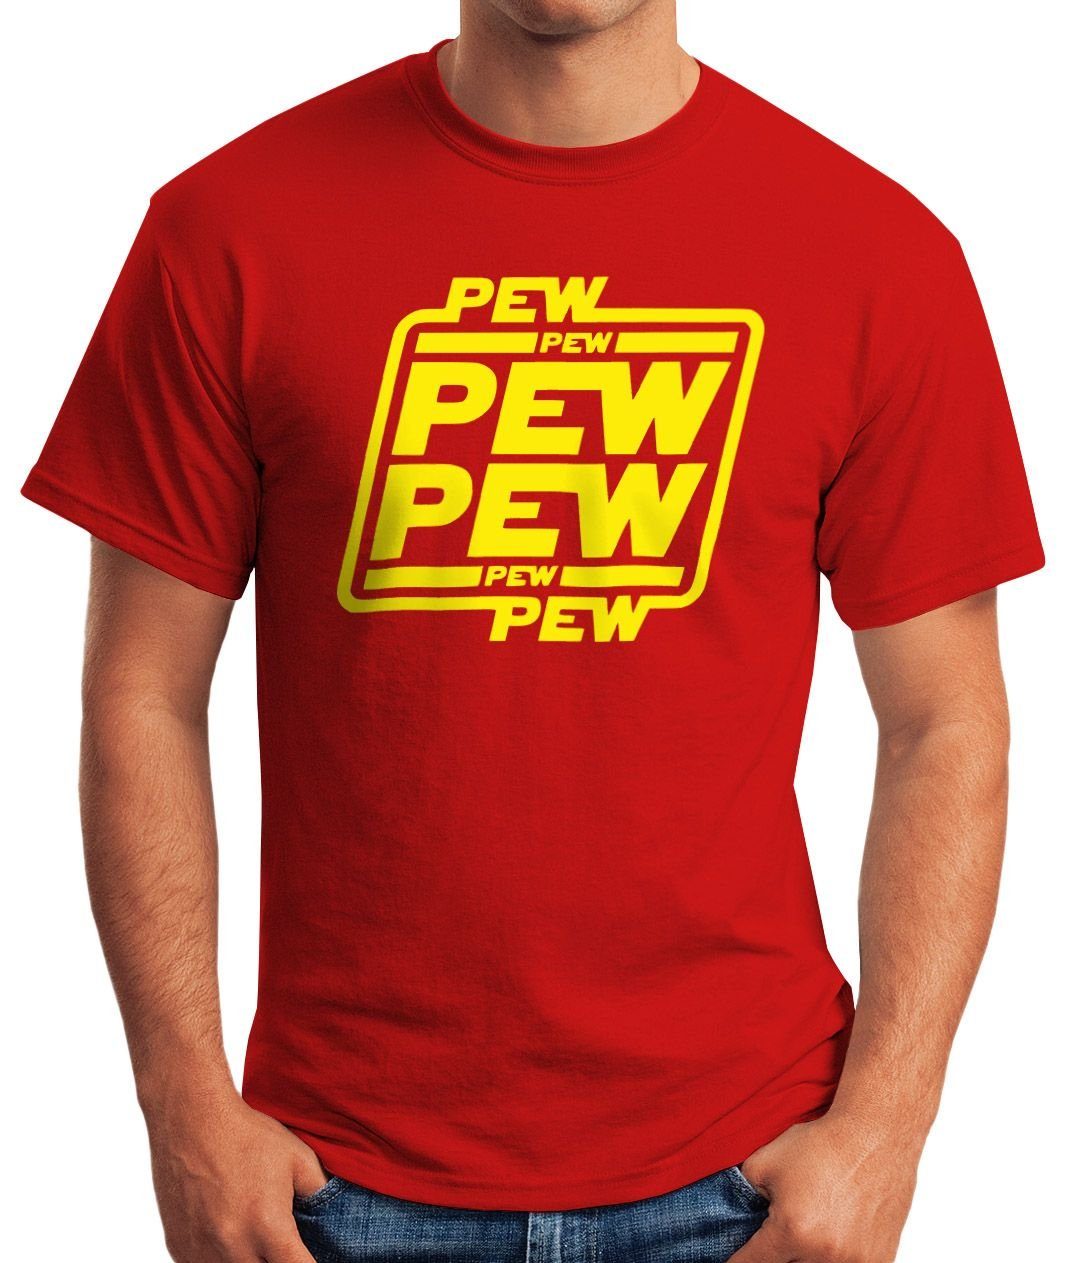 MoonWorks Print-Shirt Herren T-Shirt Pew Pew Print Moonworks® Fun-Shirt Pew rot mit